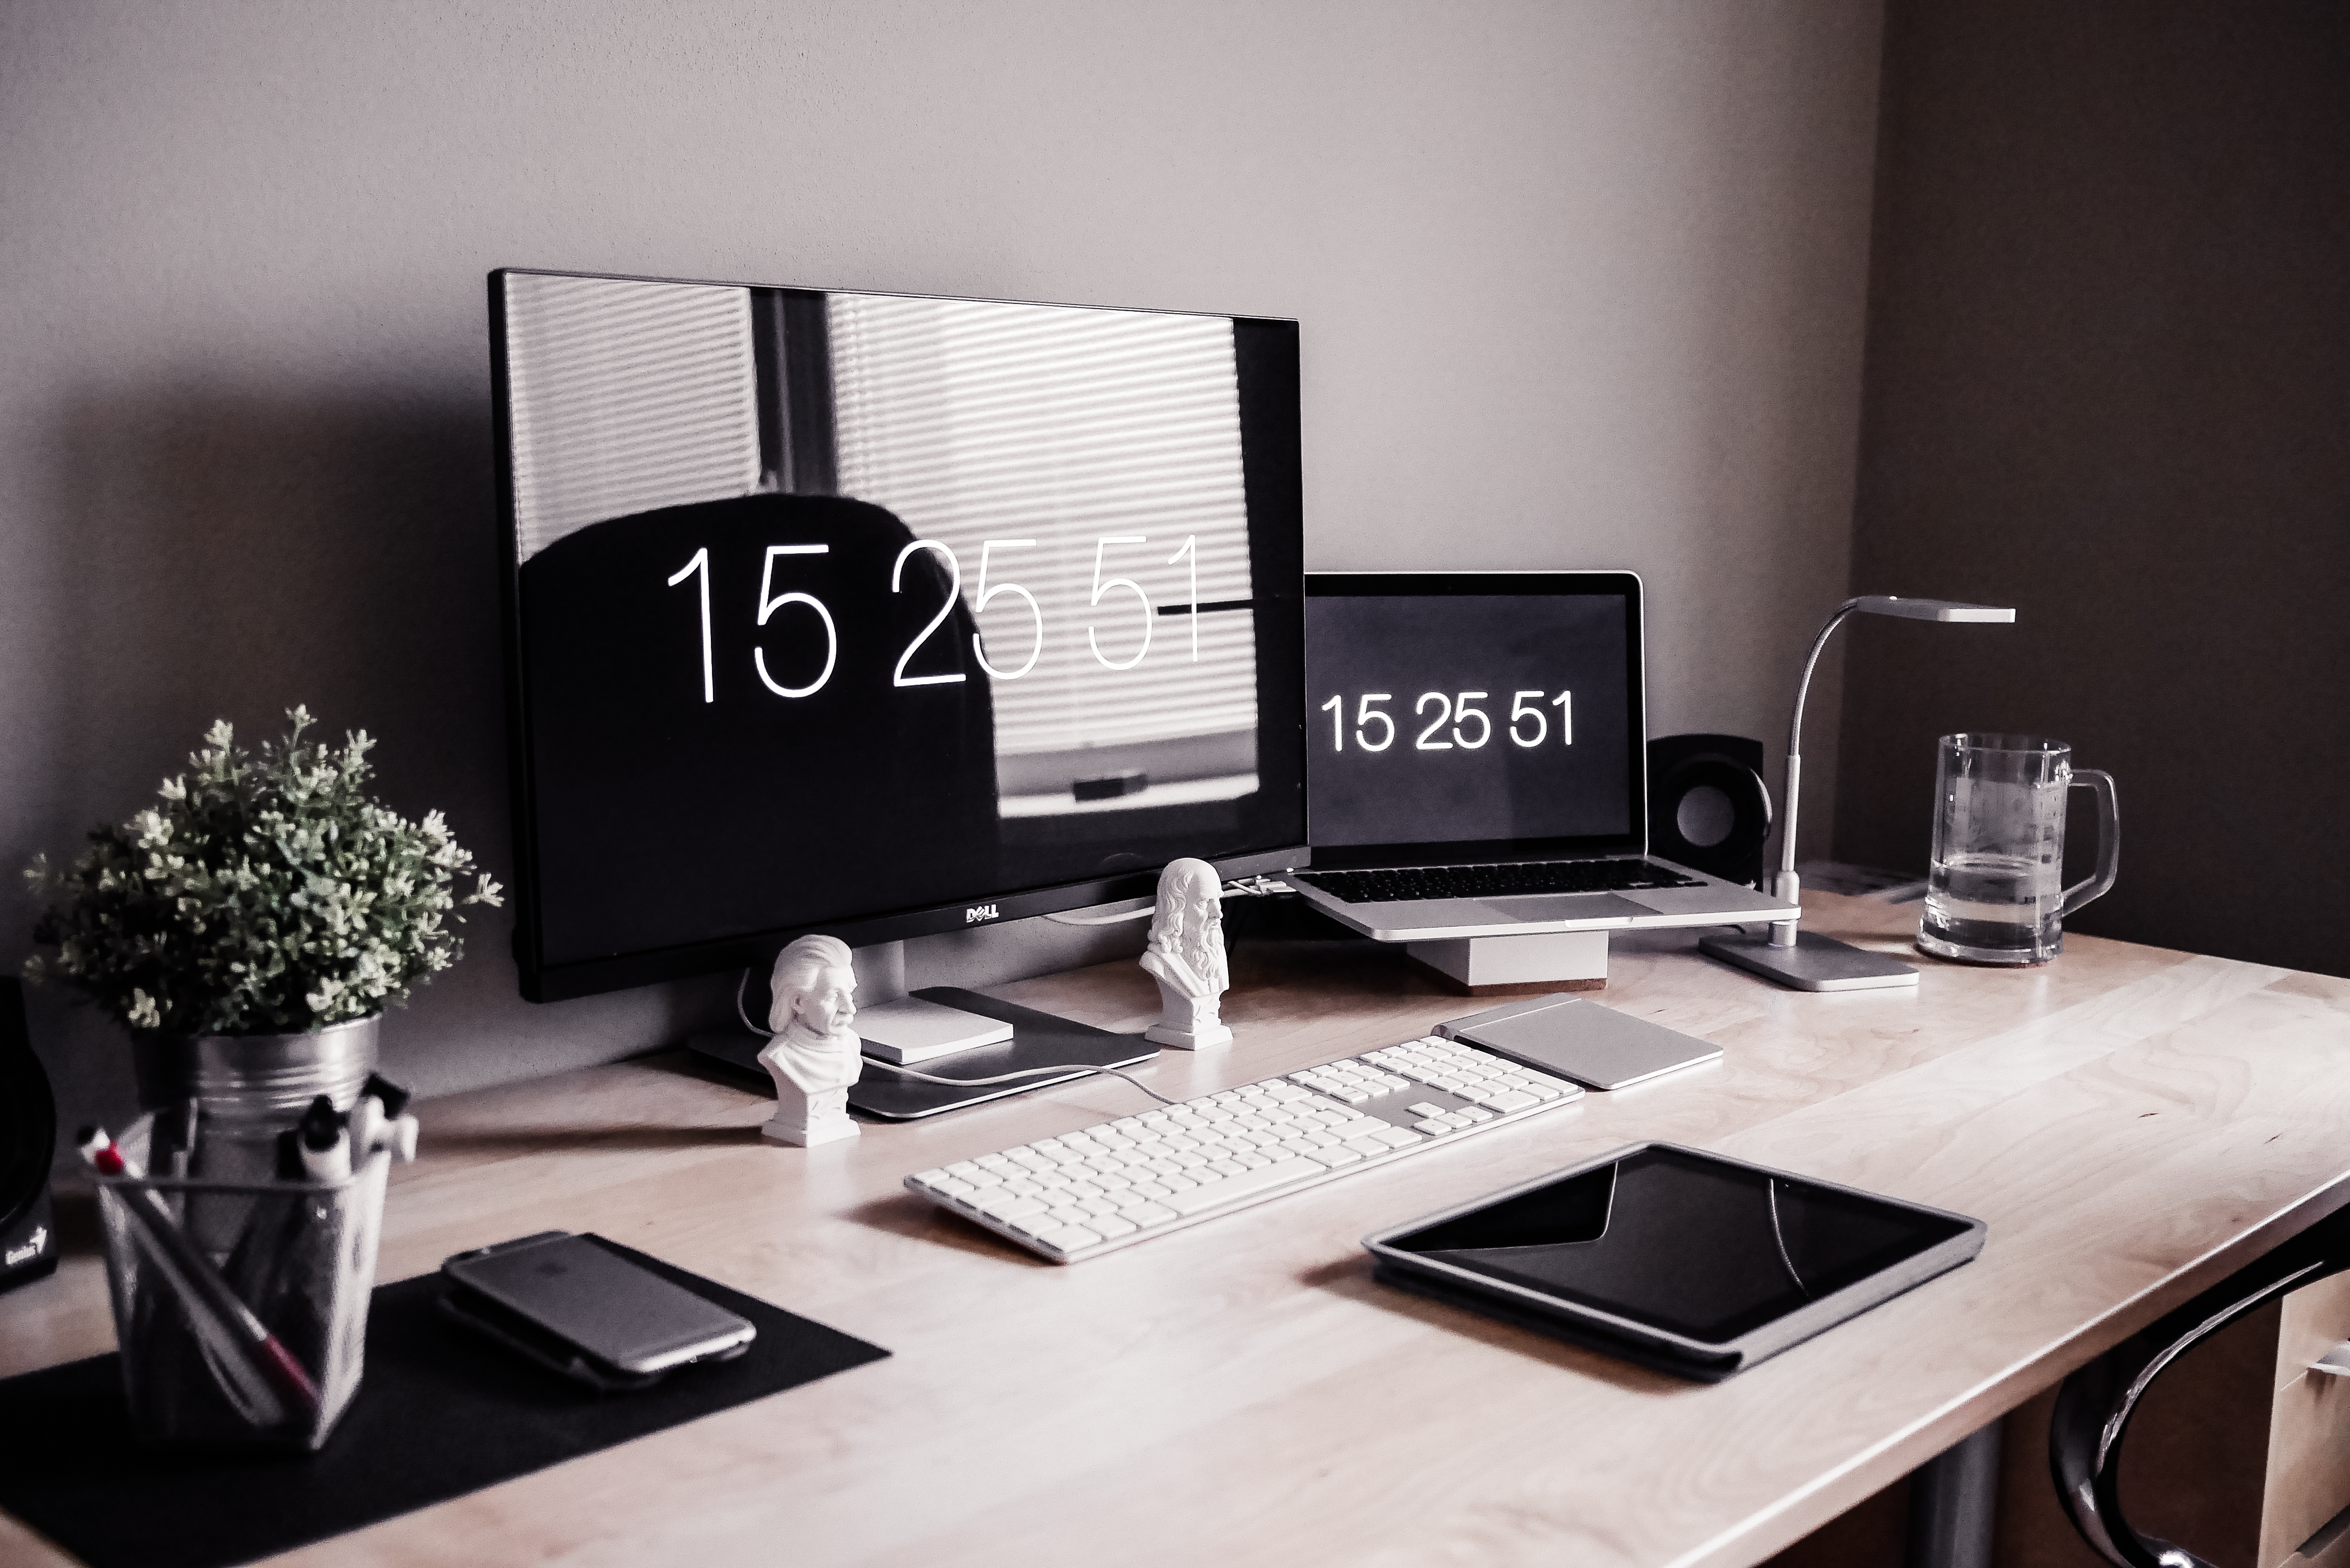 Minimalist Home Office Workspace Desk Setup Free Stock Photo | picjumbo